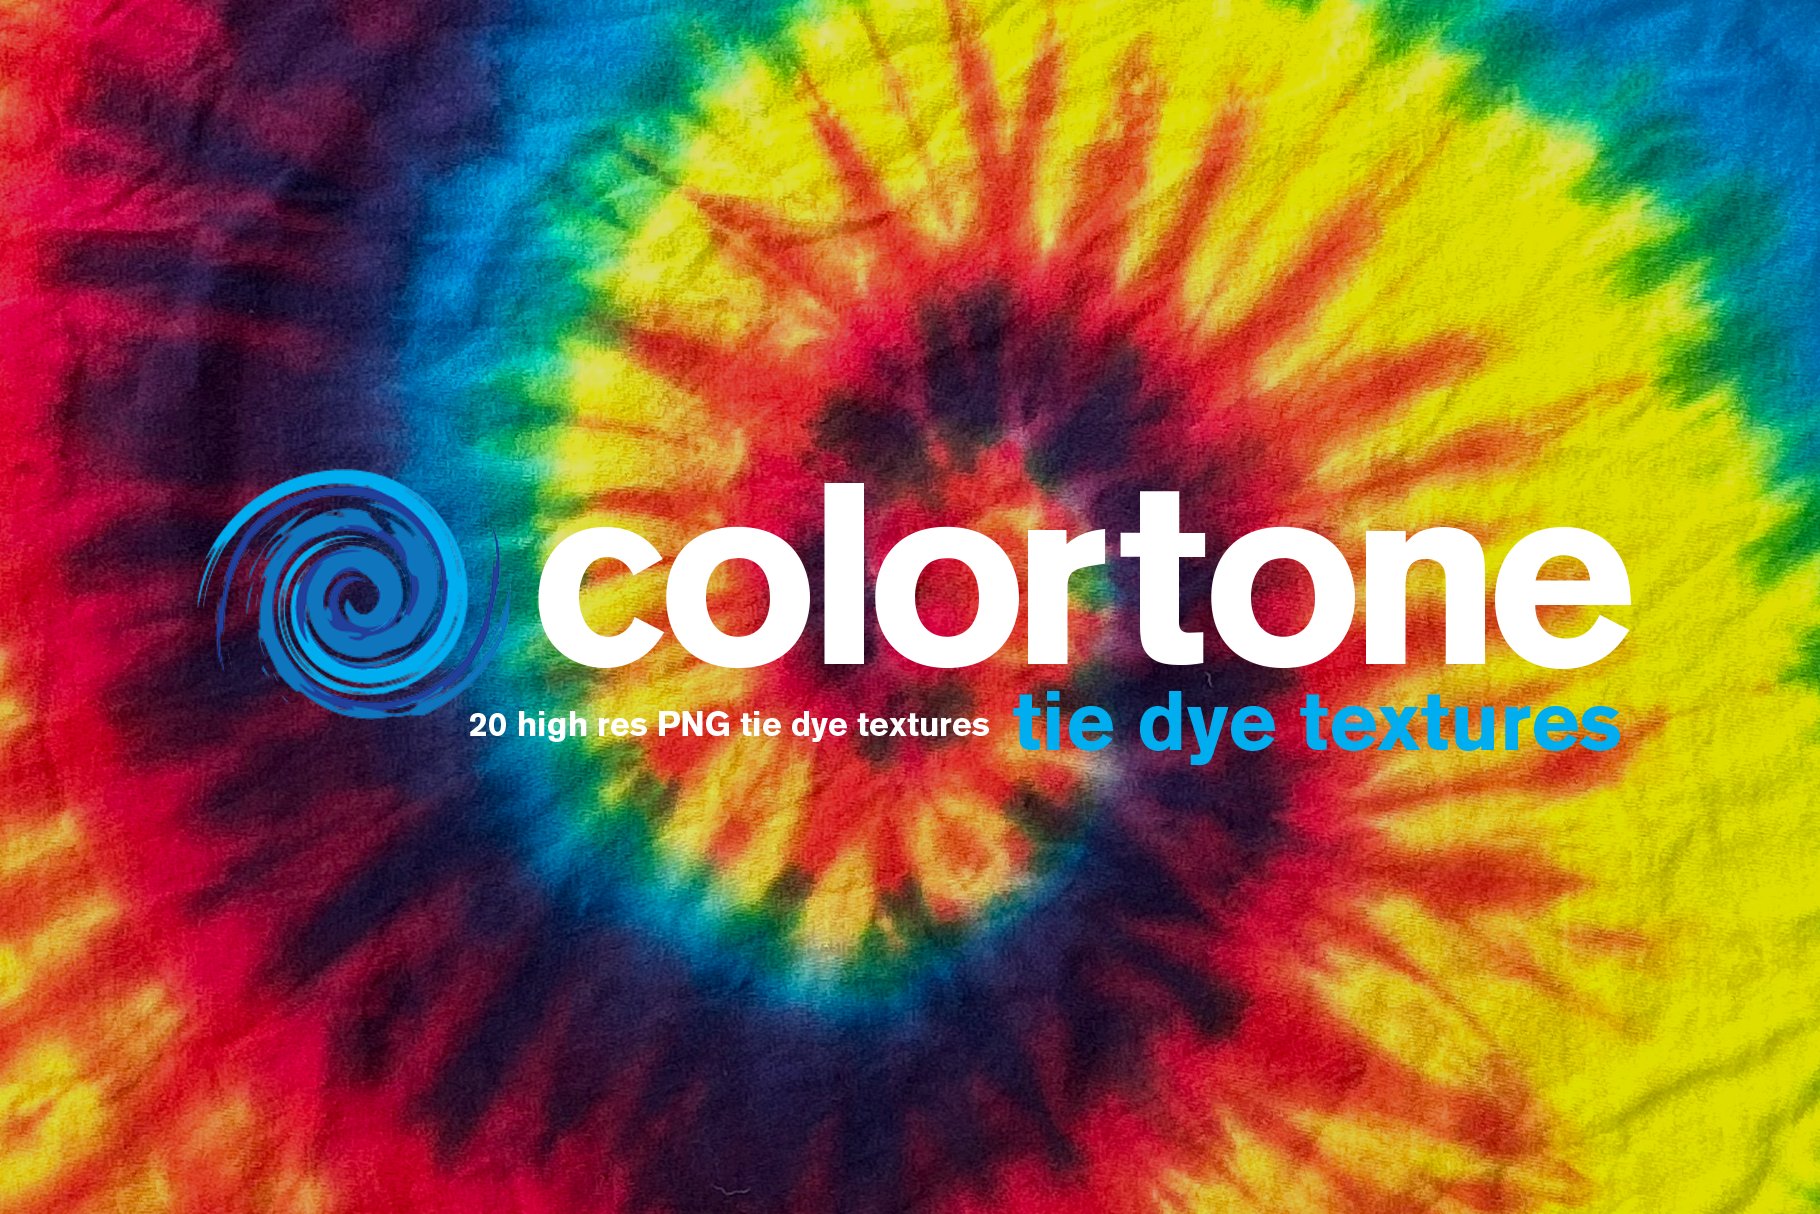 Colortone Tie Dye Textures cover image.